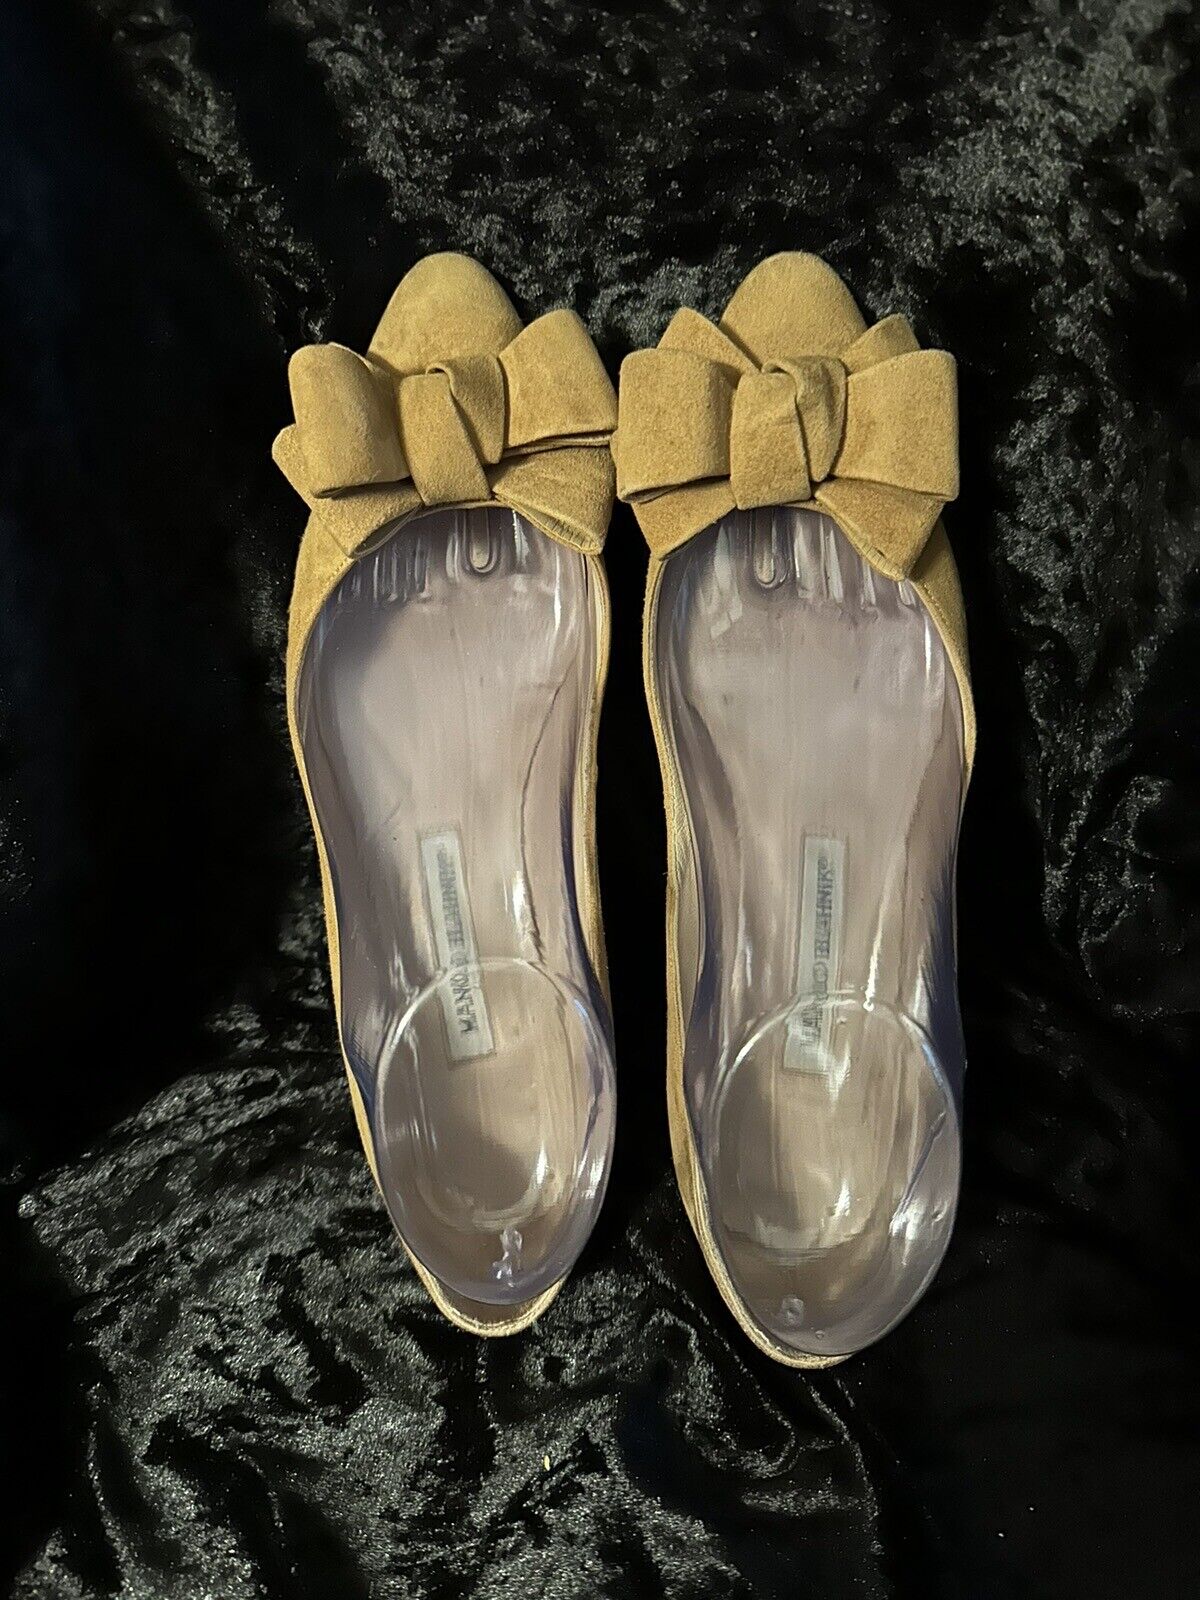 Manolo Blahnik Women\'s Lisanewbo Brown Suede Bow Heels Size 38   $725 SOLD OUT